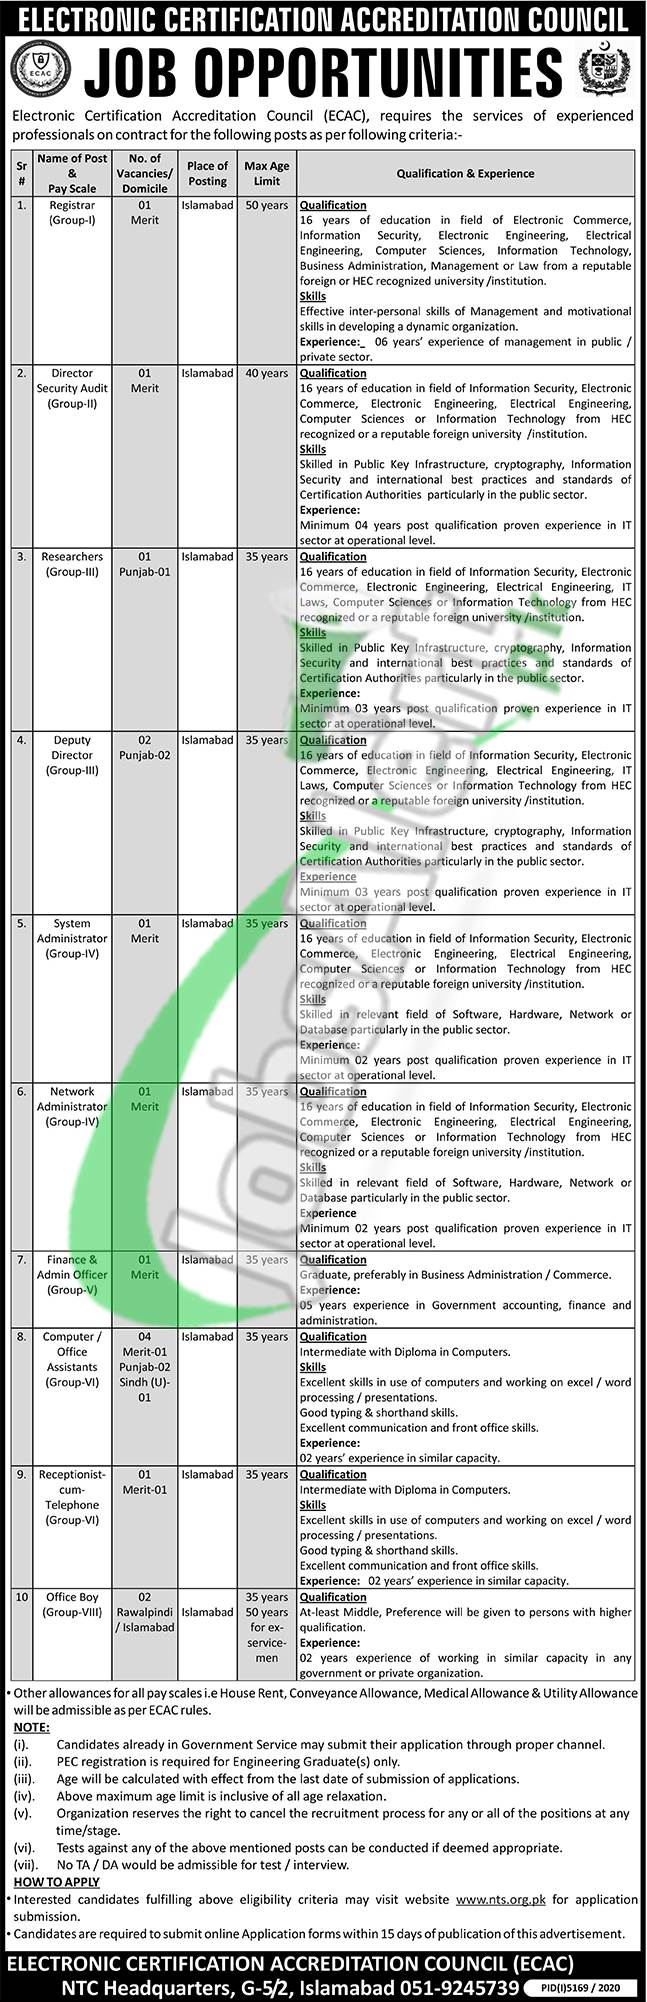 ECAC Pakistan Jobs